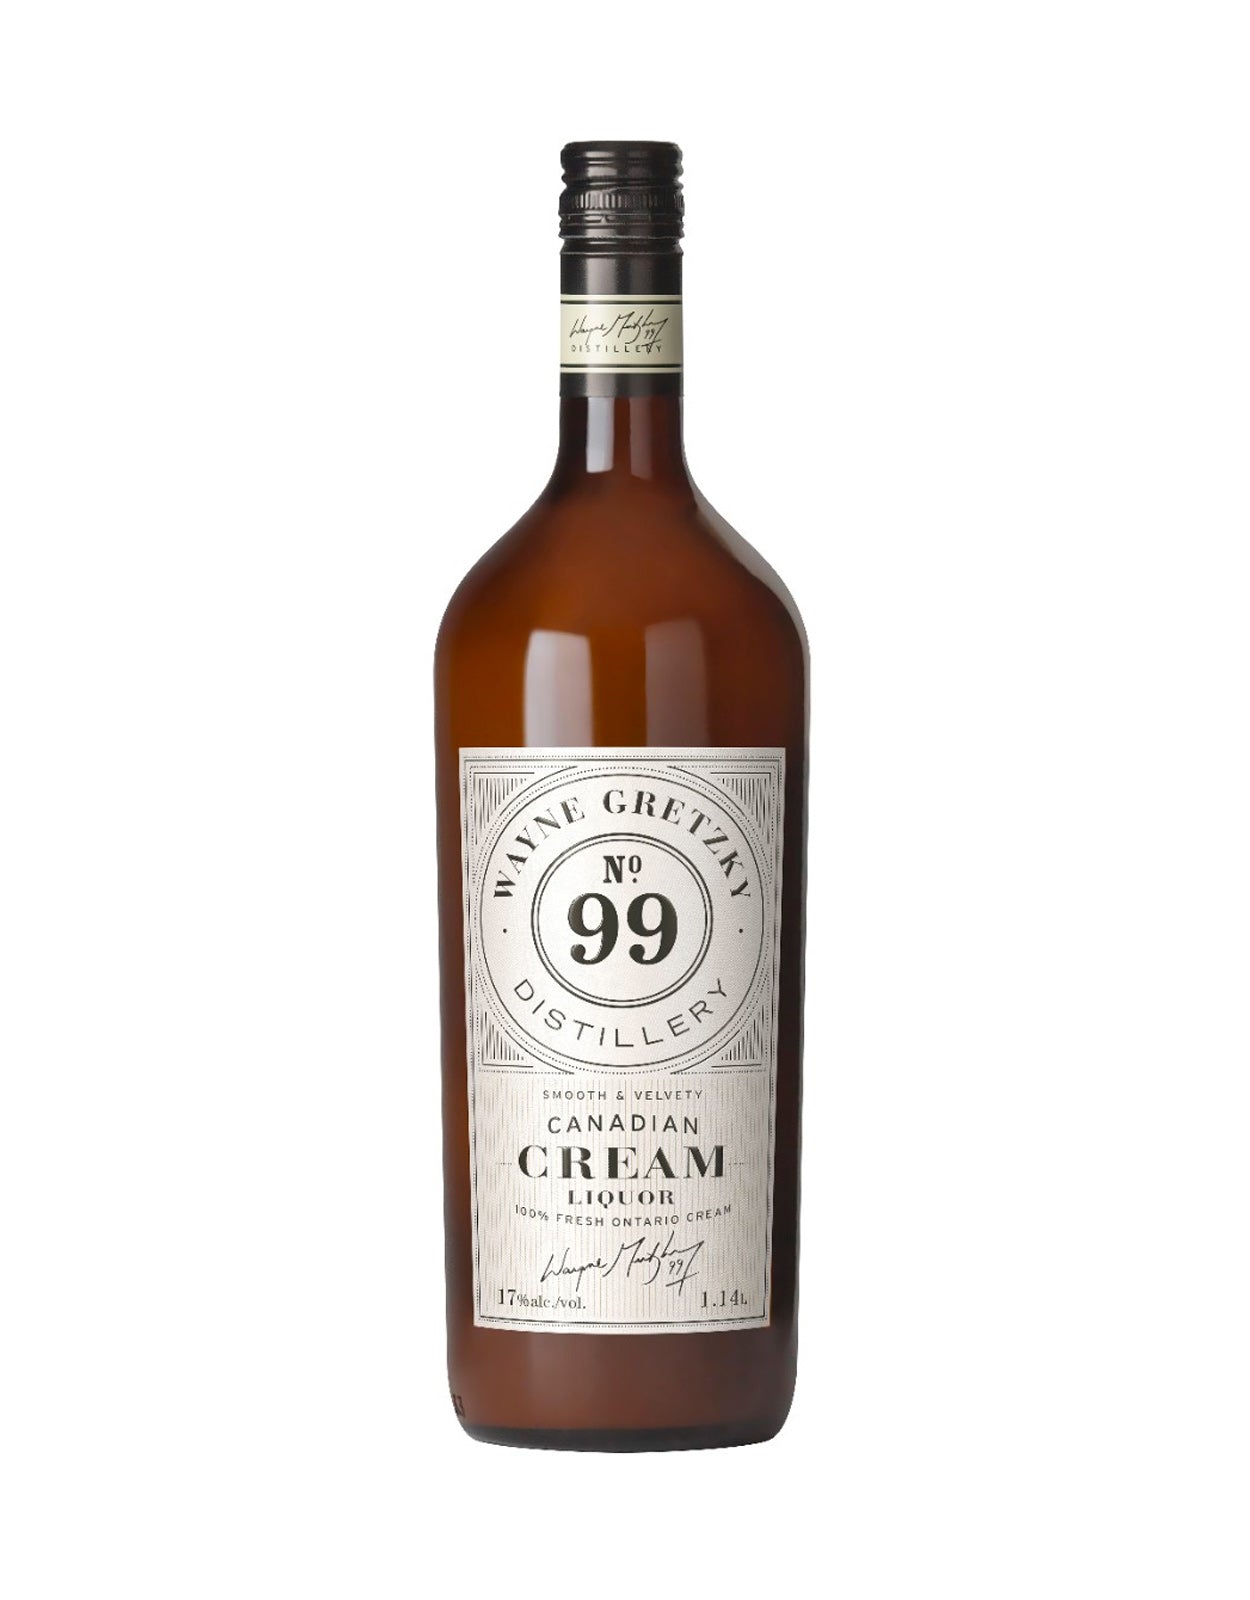 Wayne Gretzky Whisky Cream - 1.14 Litre Bottle